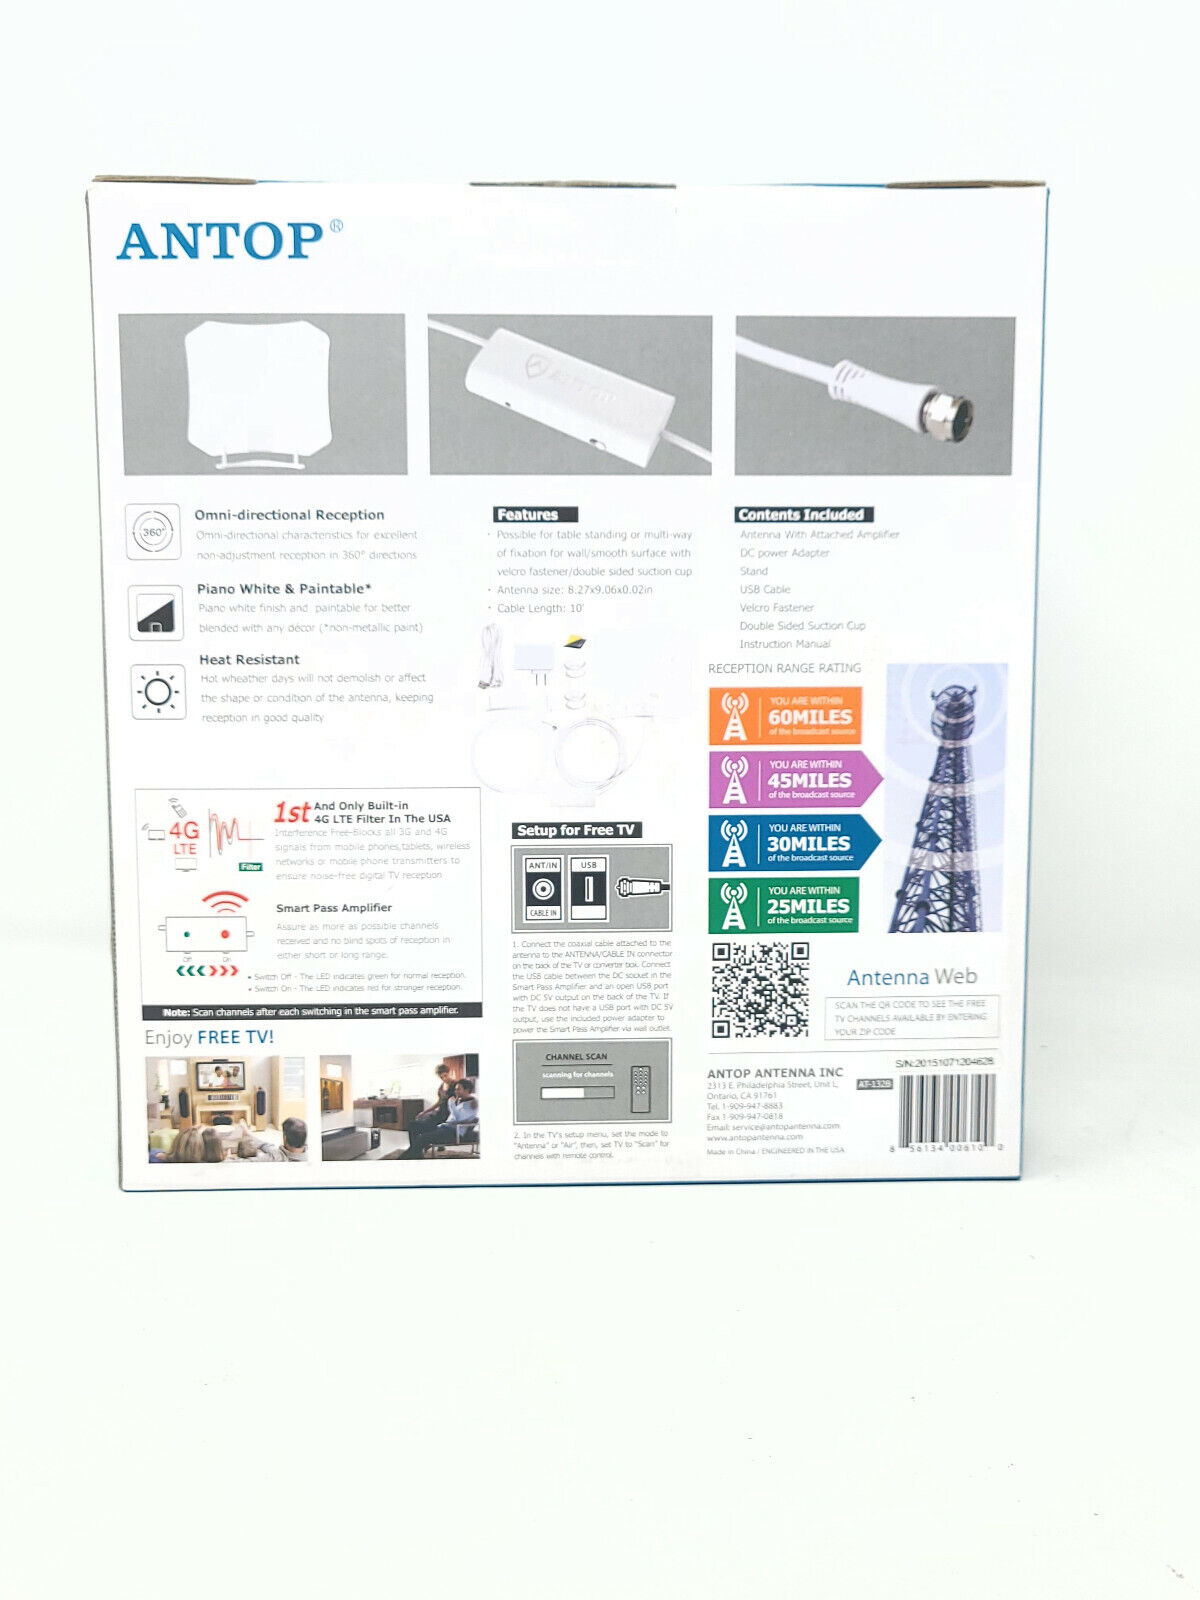 ANTOP AT-132 Paper Thin High Gain Indoor TV Antenna, 30 Mile Long Range - NEW